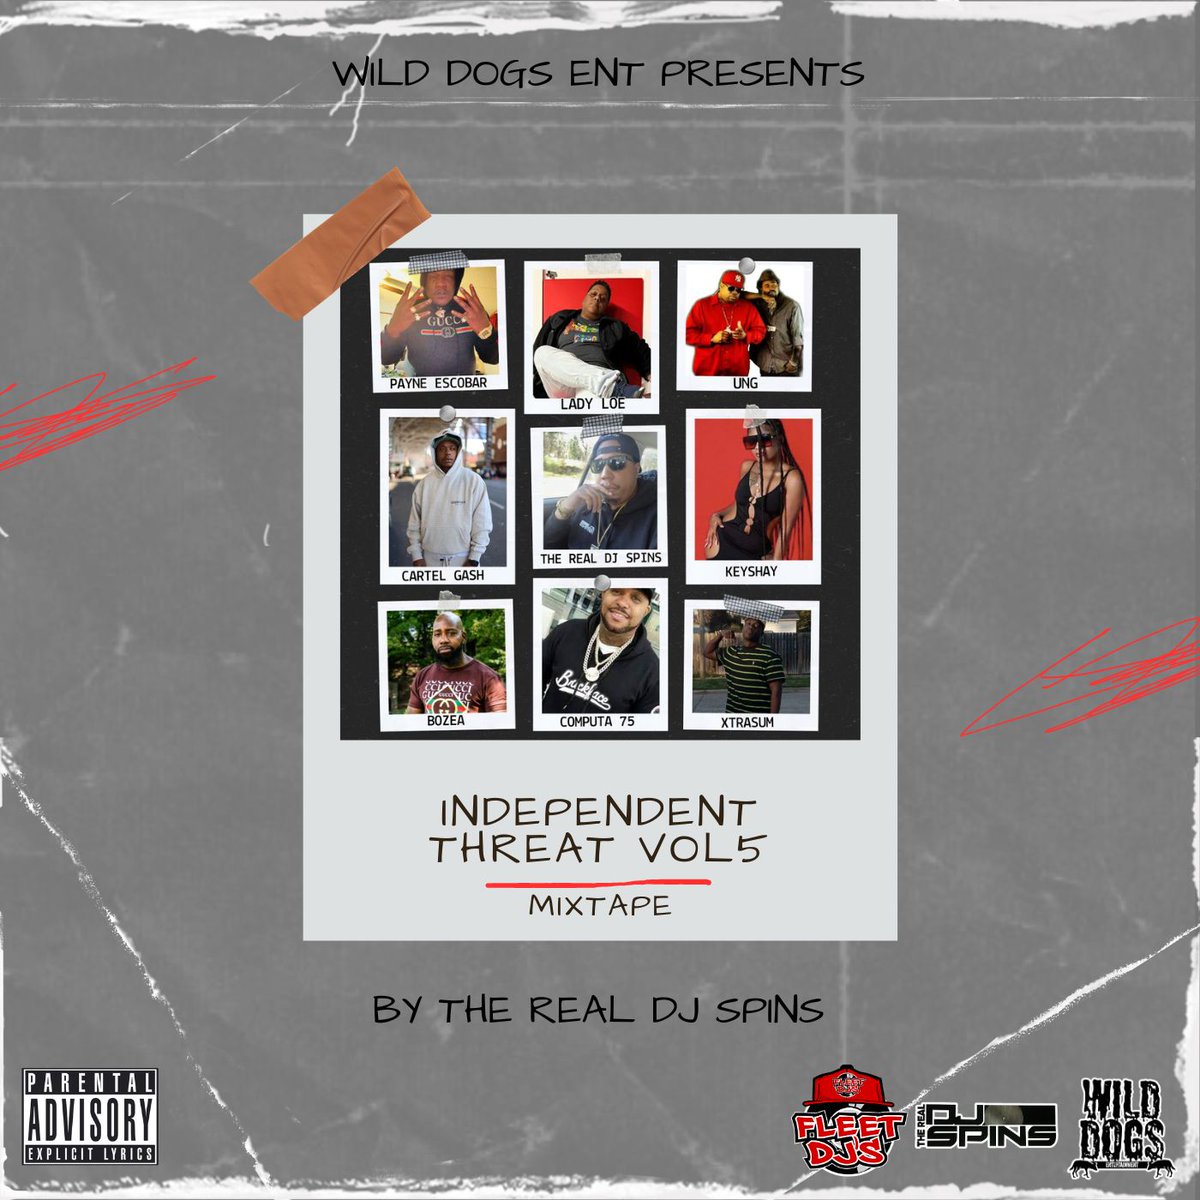 Out Now ' Independent Threat Vol 5' [Mixtape] By @therealdjspins Presented By @WildDogsEnt Featuring @CartelGash, @computamobbdeep, @LadyLoeTheUnit , @payneEsco, & More #Hiphop #NewMusic #DJ #Mixtape #Rap #IndieTape #RT #FleetDjs

Stream Here: li.sten.to/4z3uq4zj